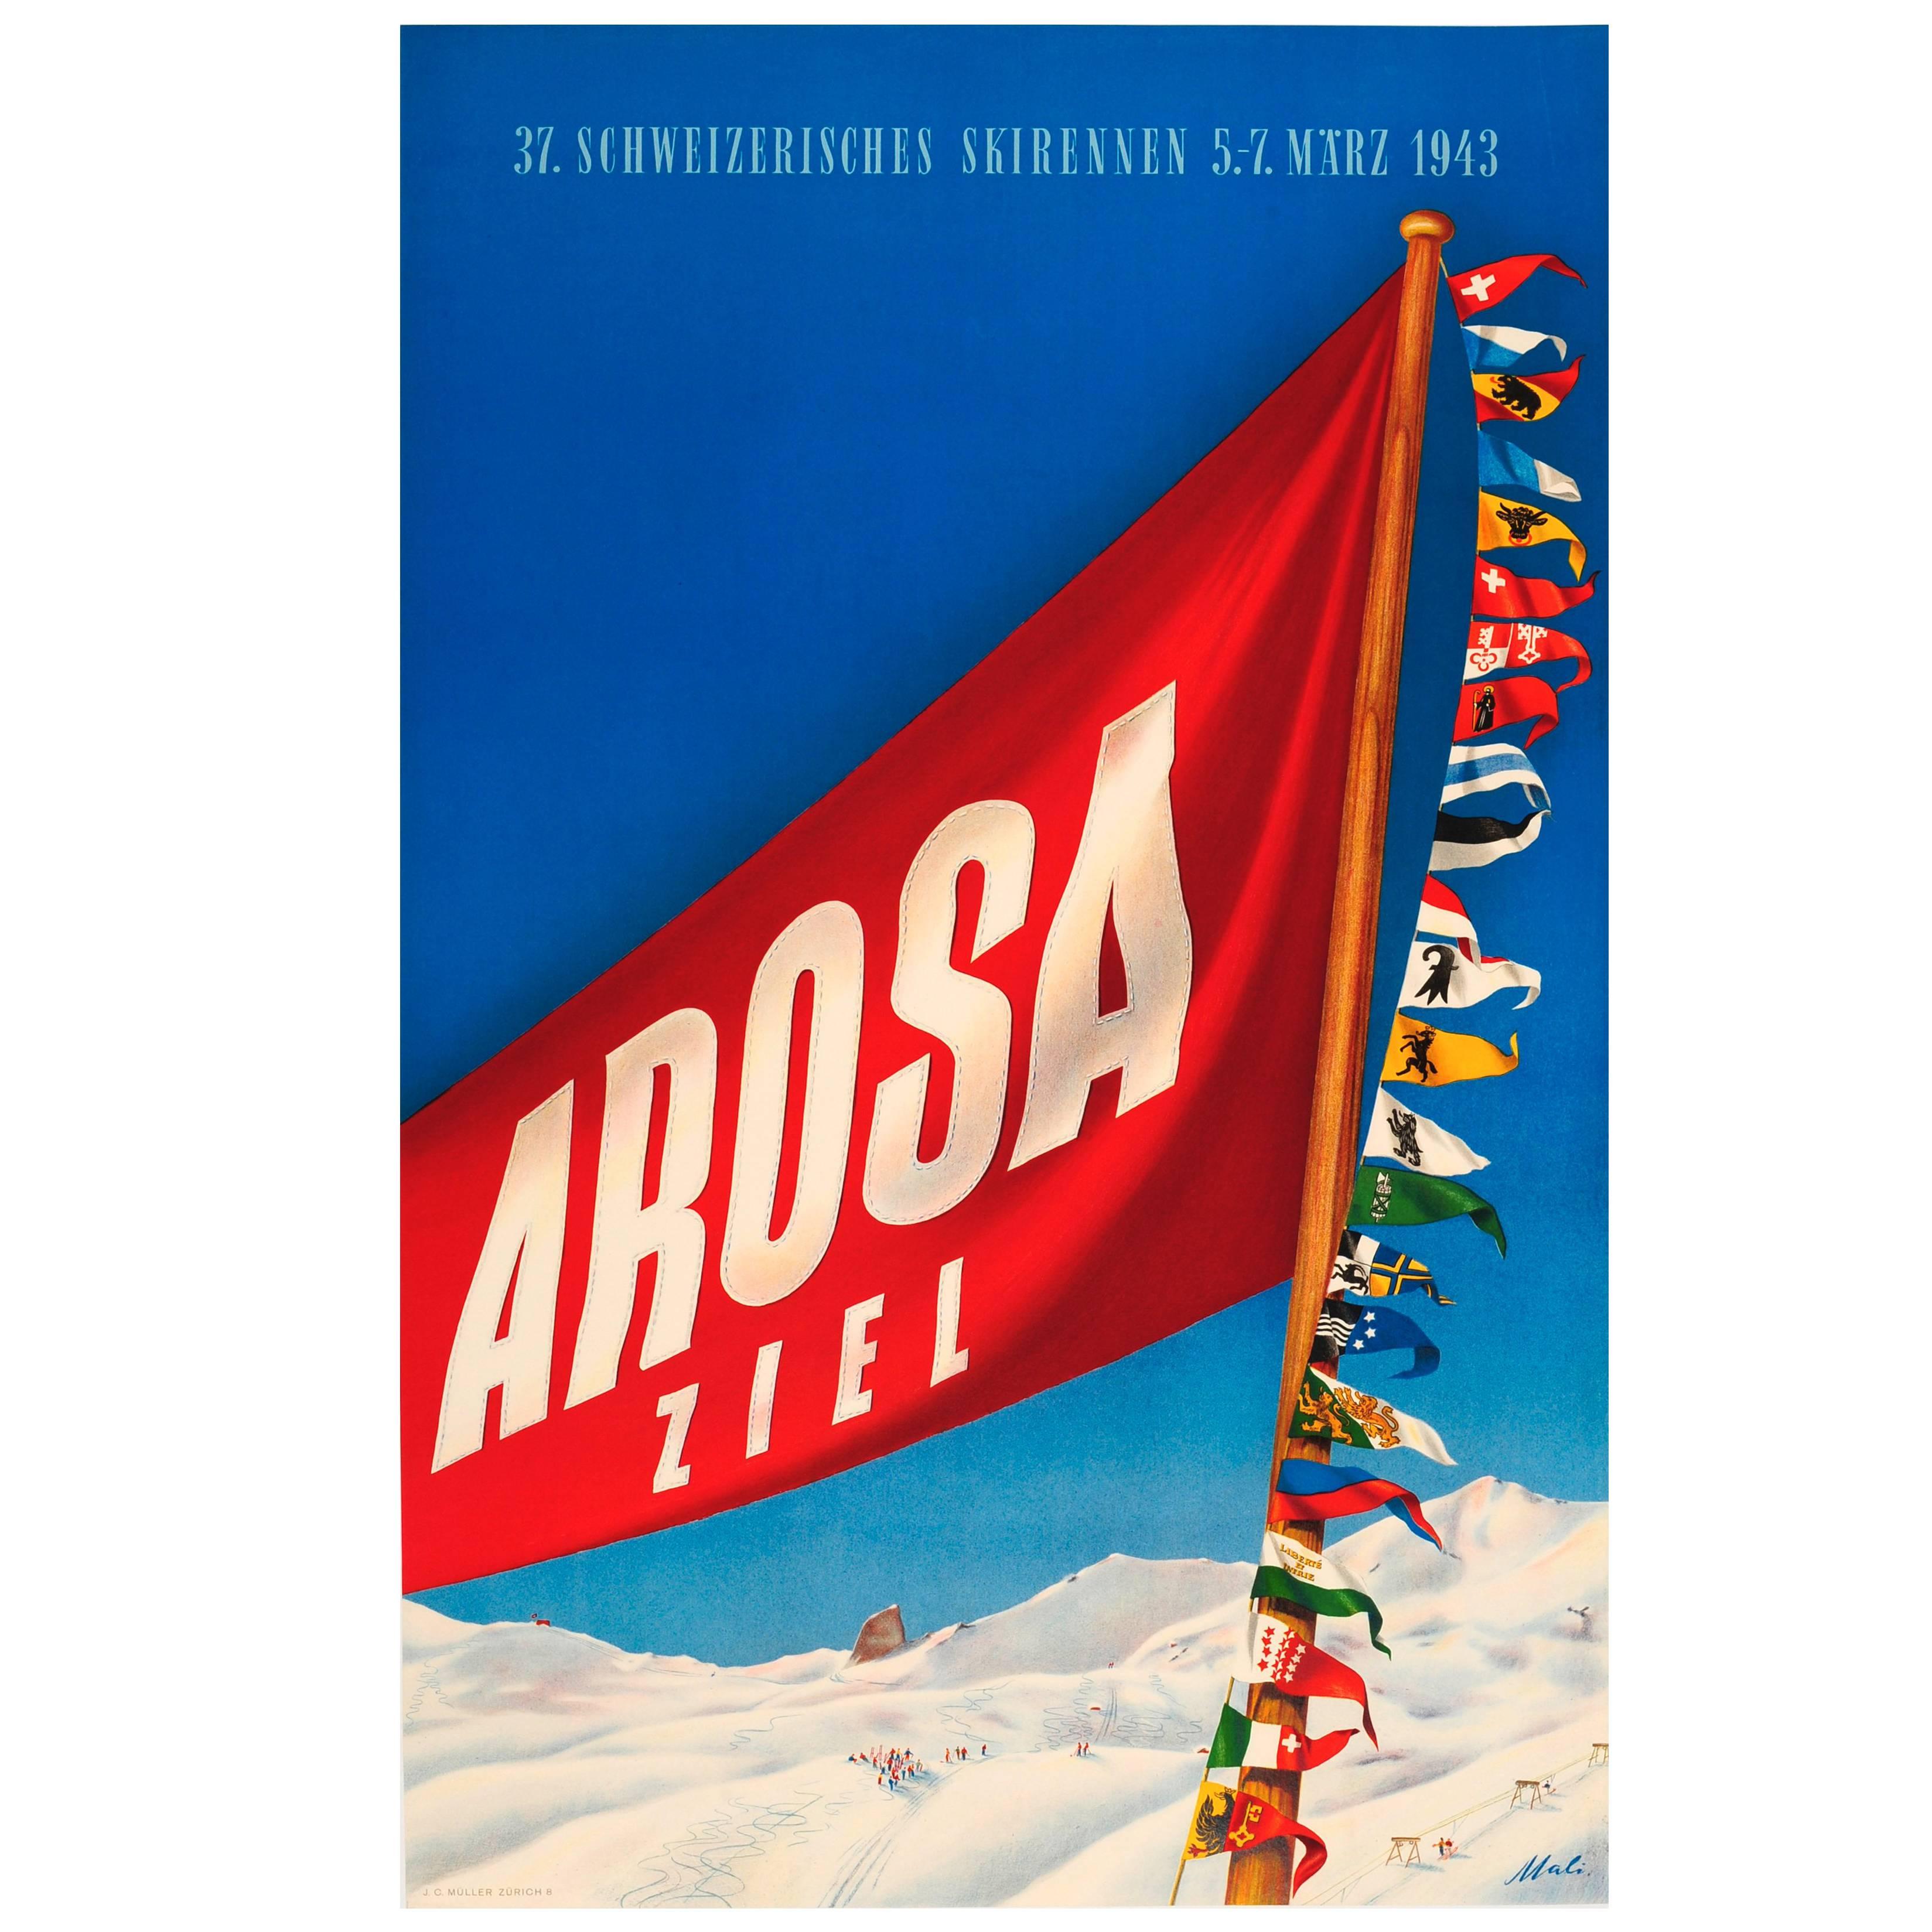 Original Vintage Skiing Event Poster for the 37 Schweizerisches Skirennen Arosa For Sale